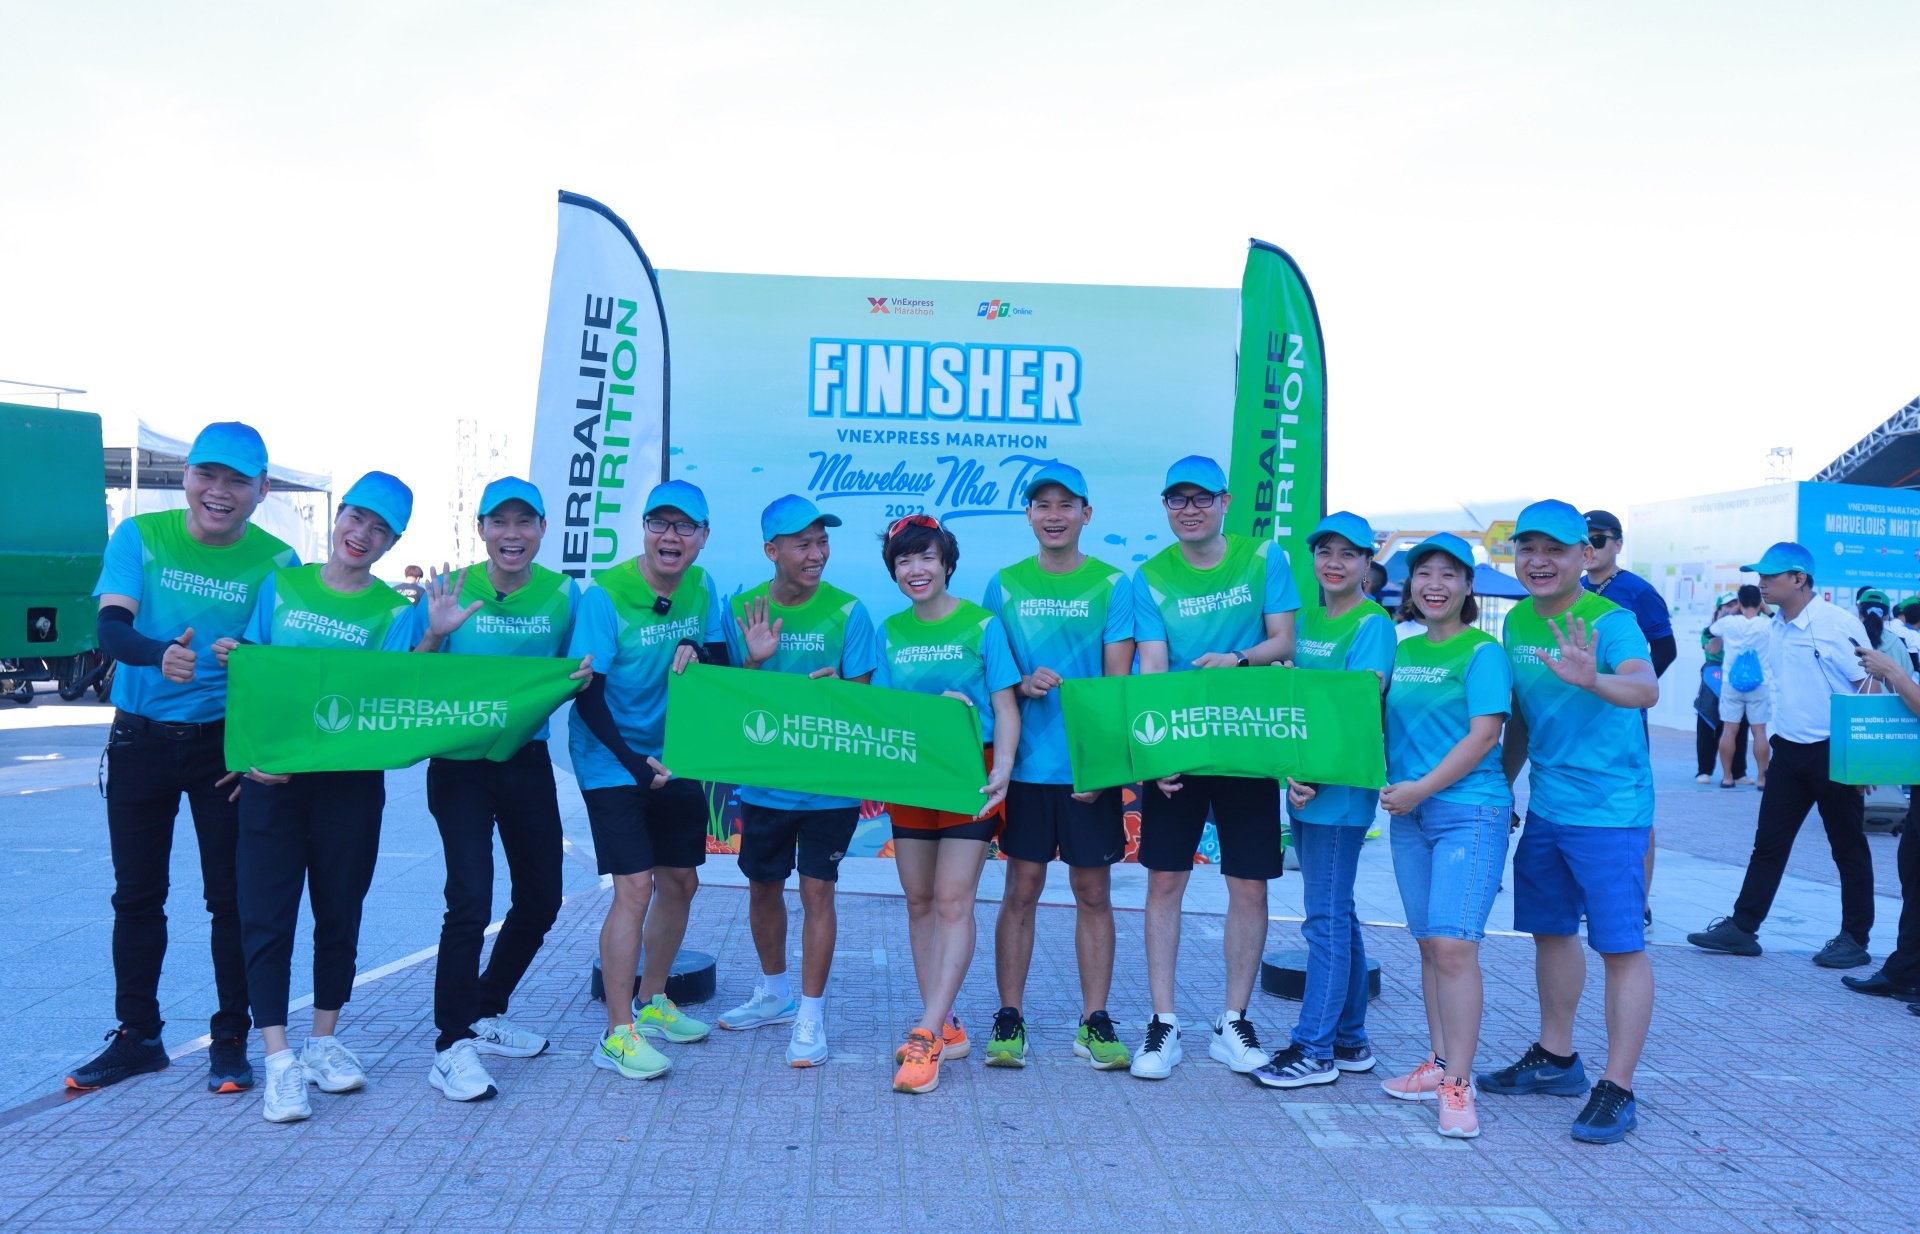 Herbalife Vietnam became sponsor of VnExpress Marathon Marvelous Nha Trang 2022